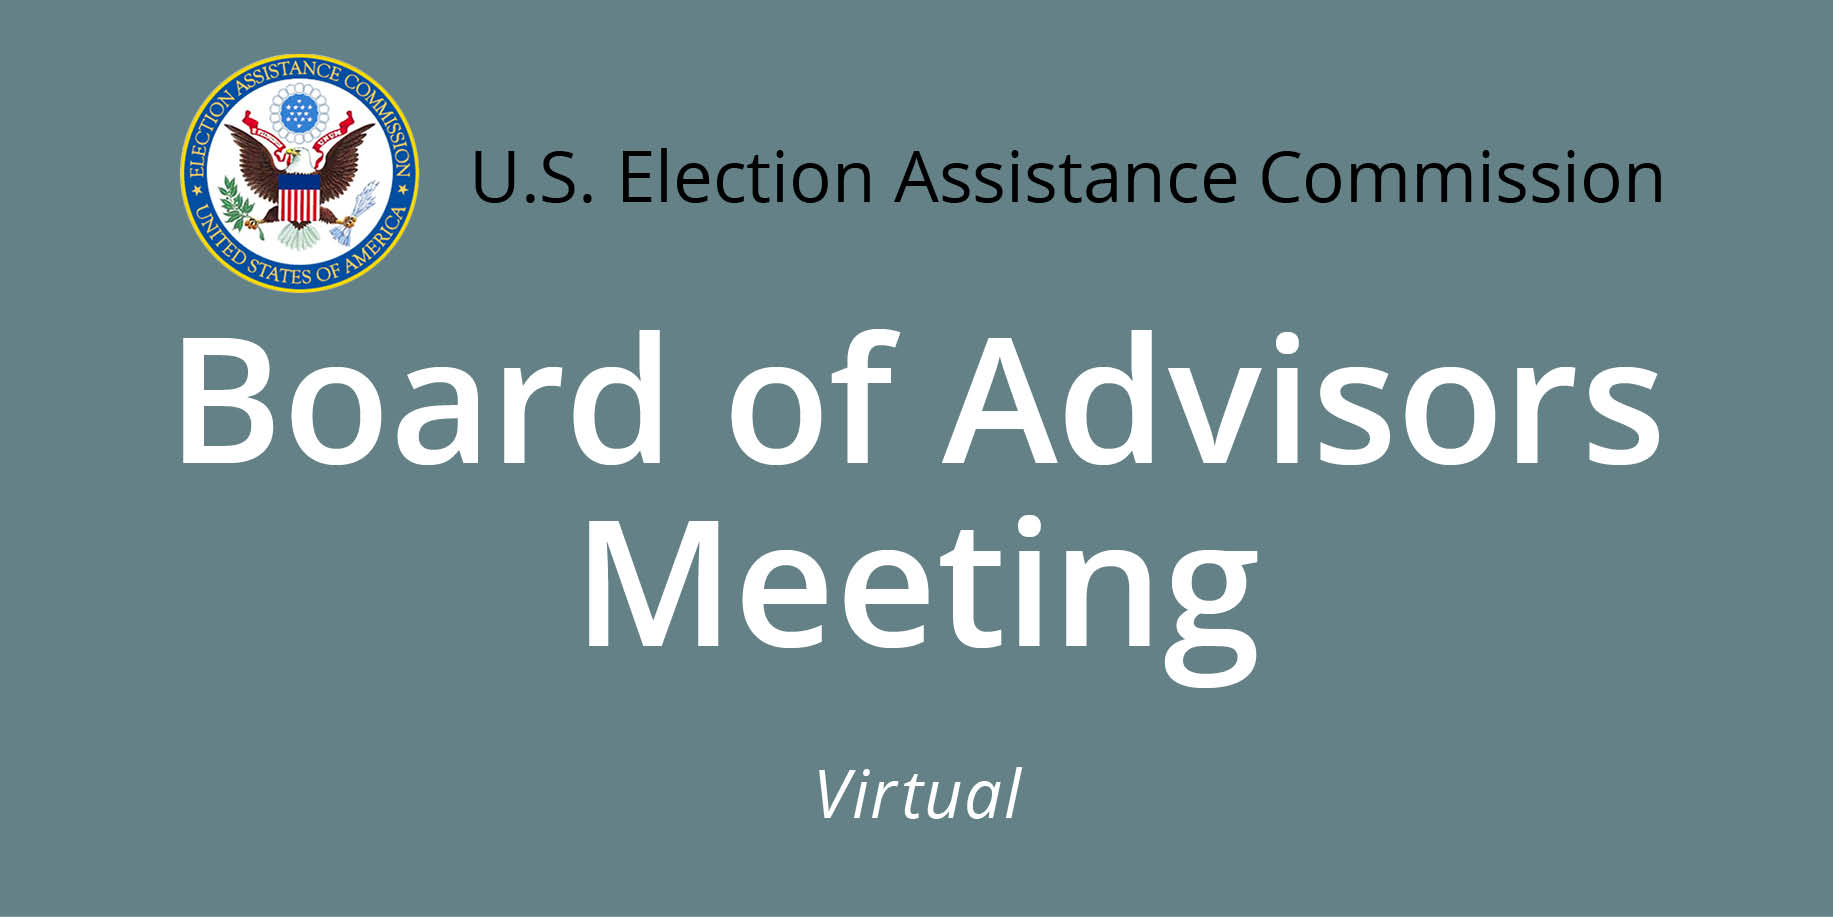 virtual Board of Advisors Meeting